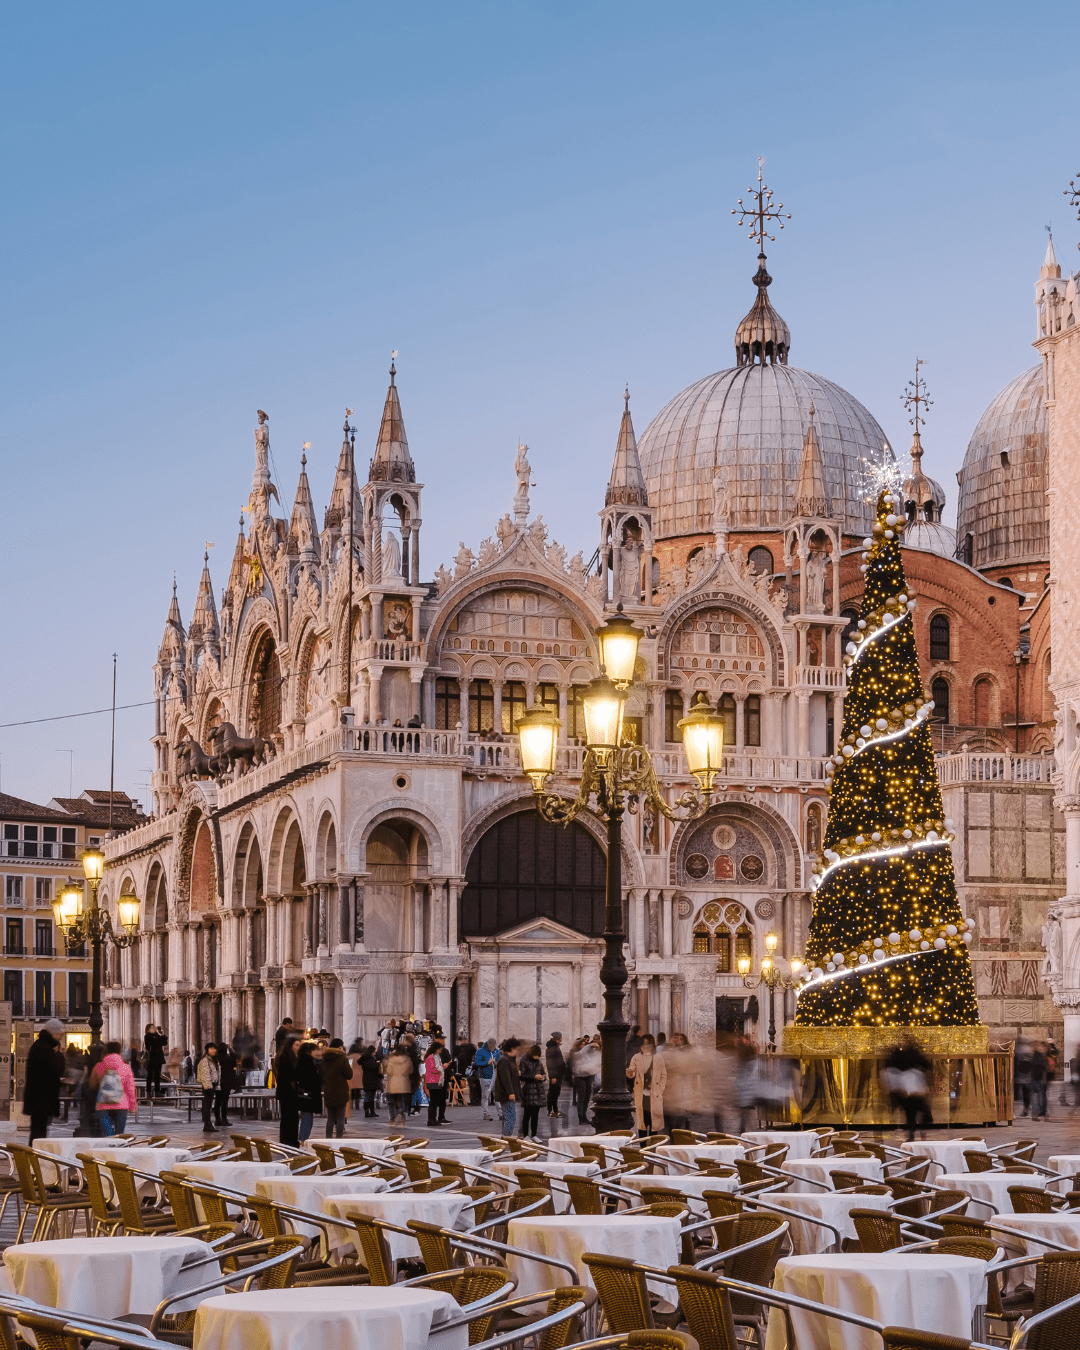 Natale a venezia - 1